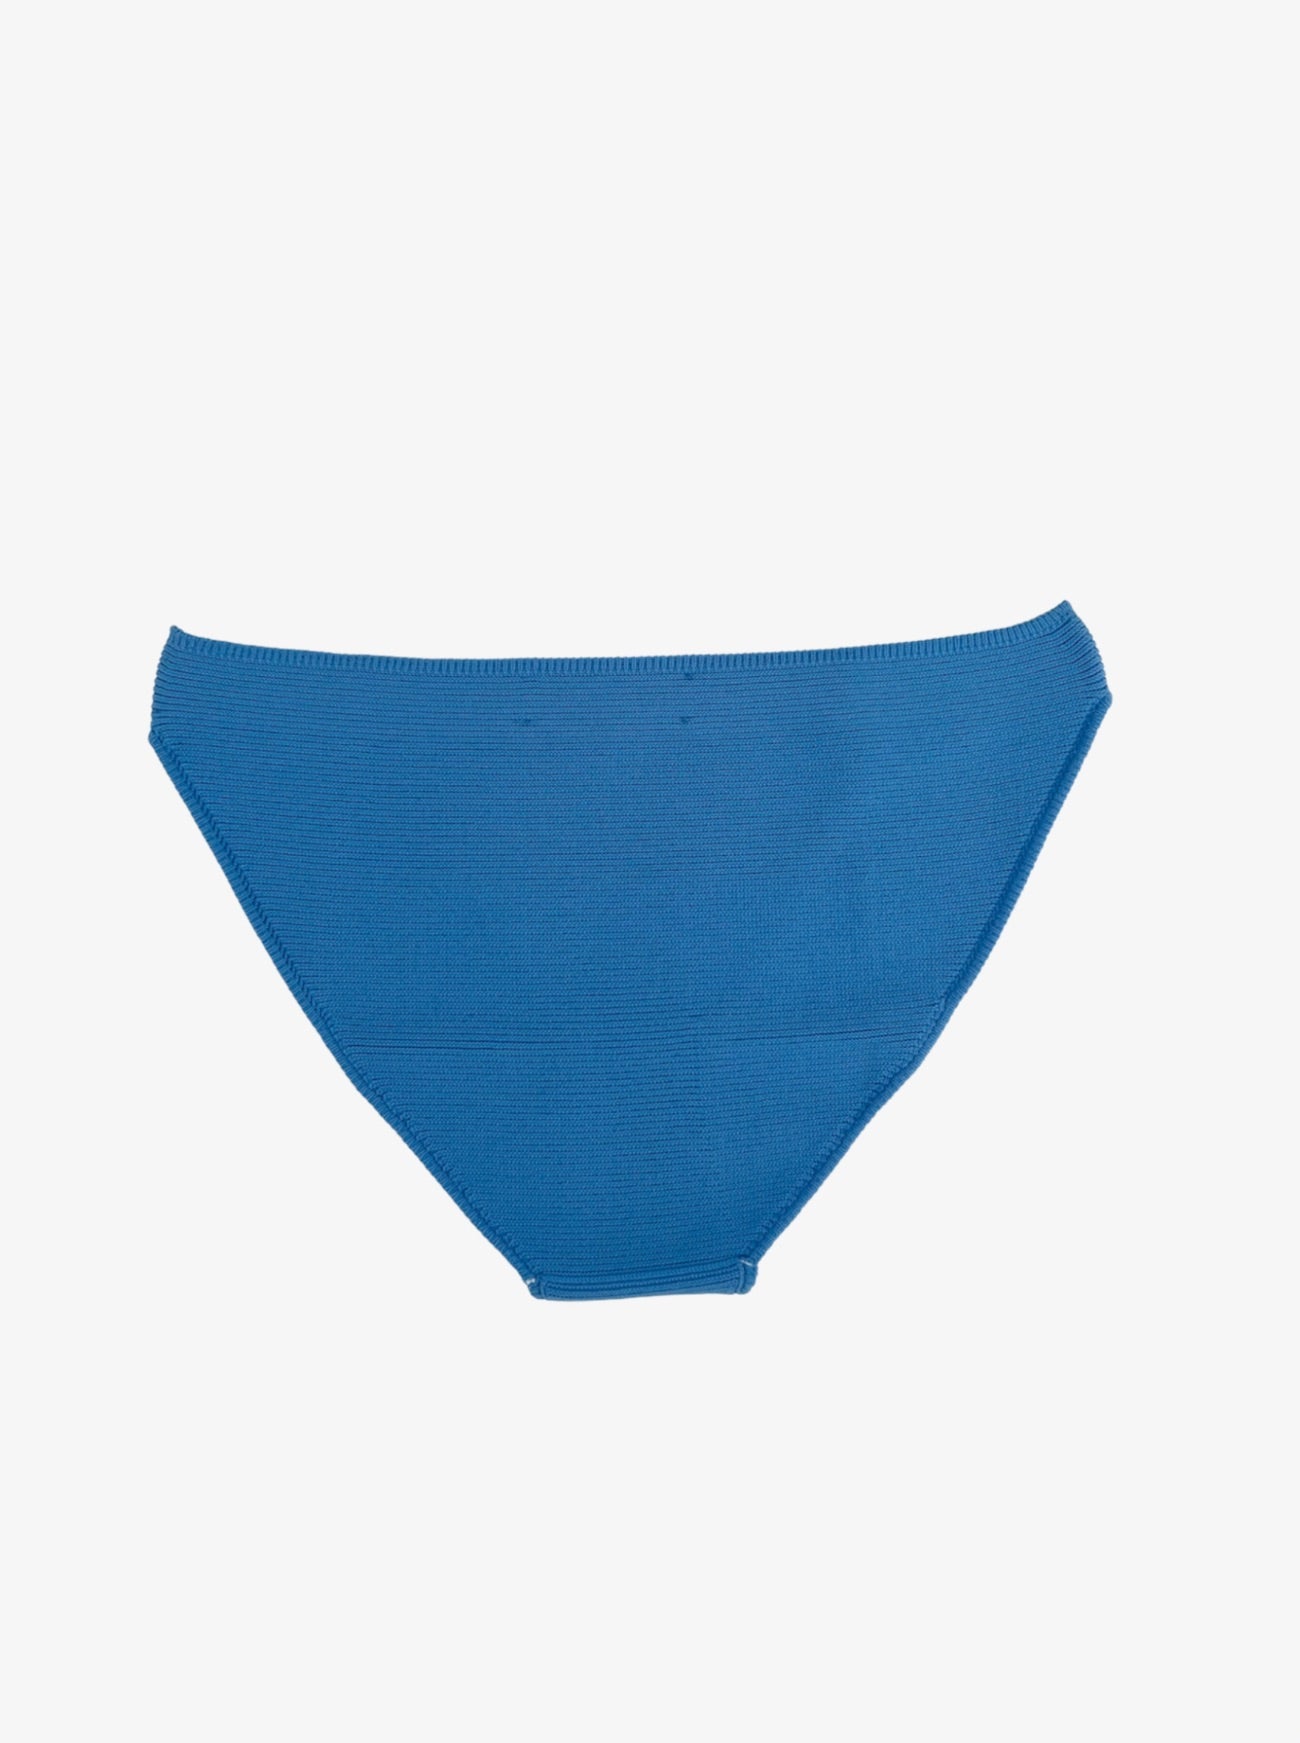 makaha pacific blue low rise bikini back view